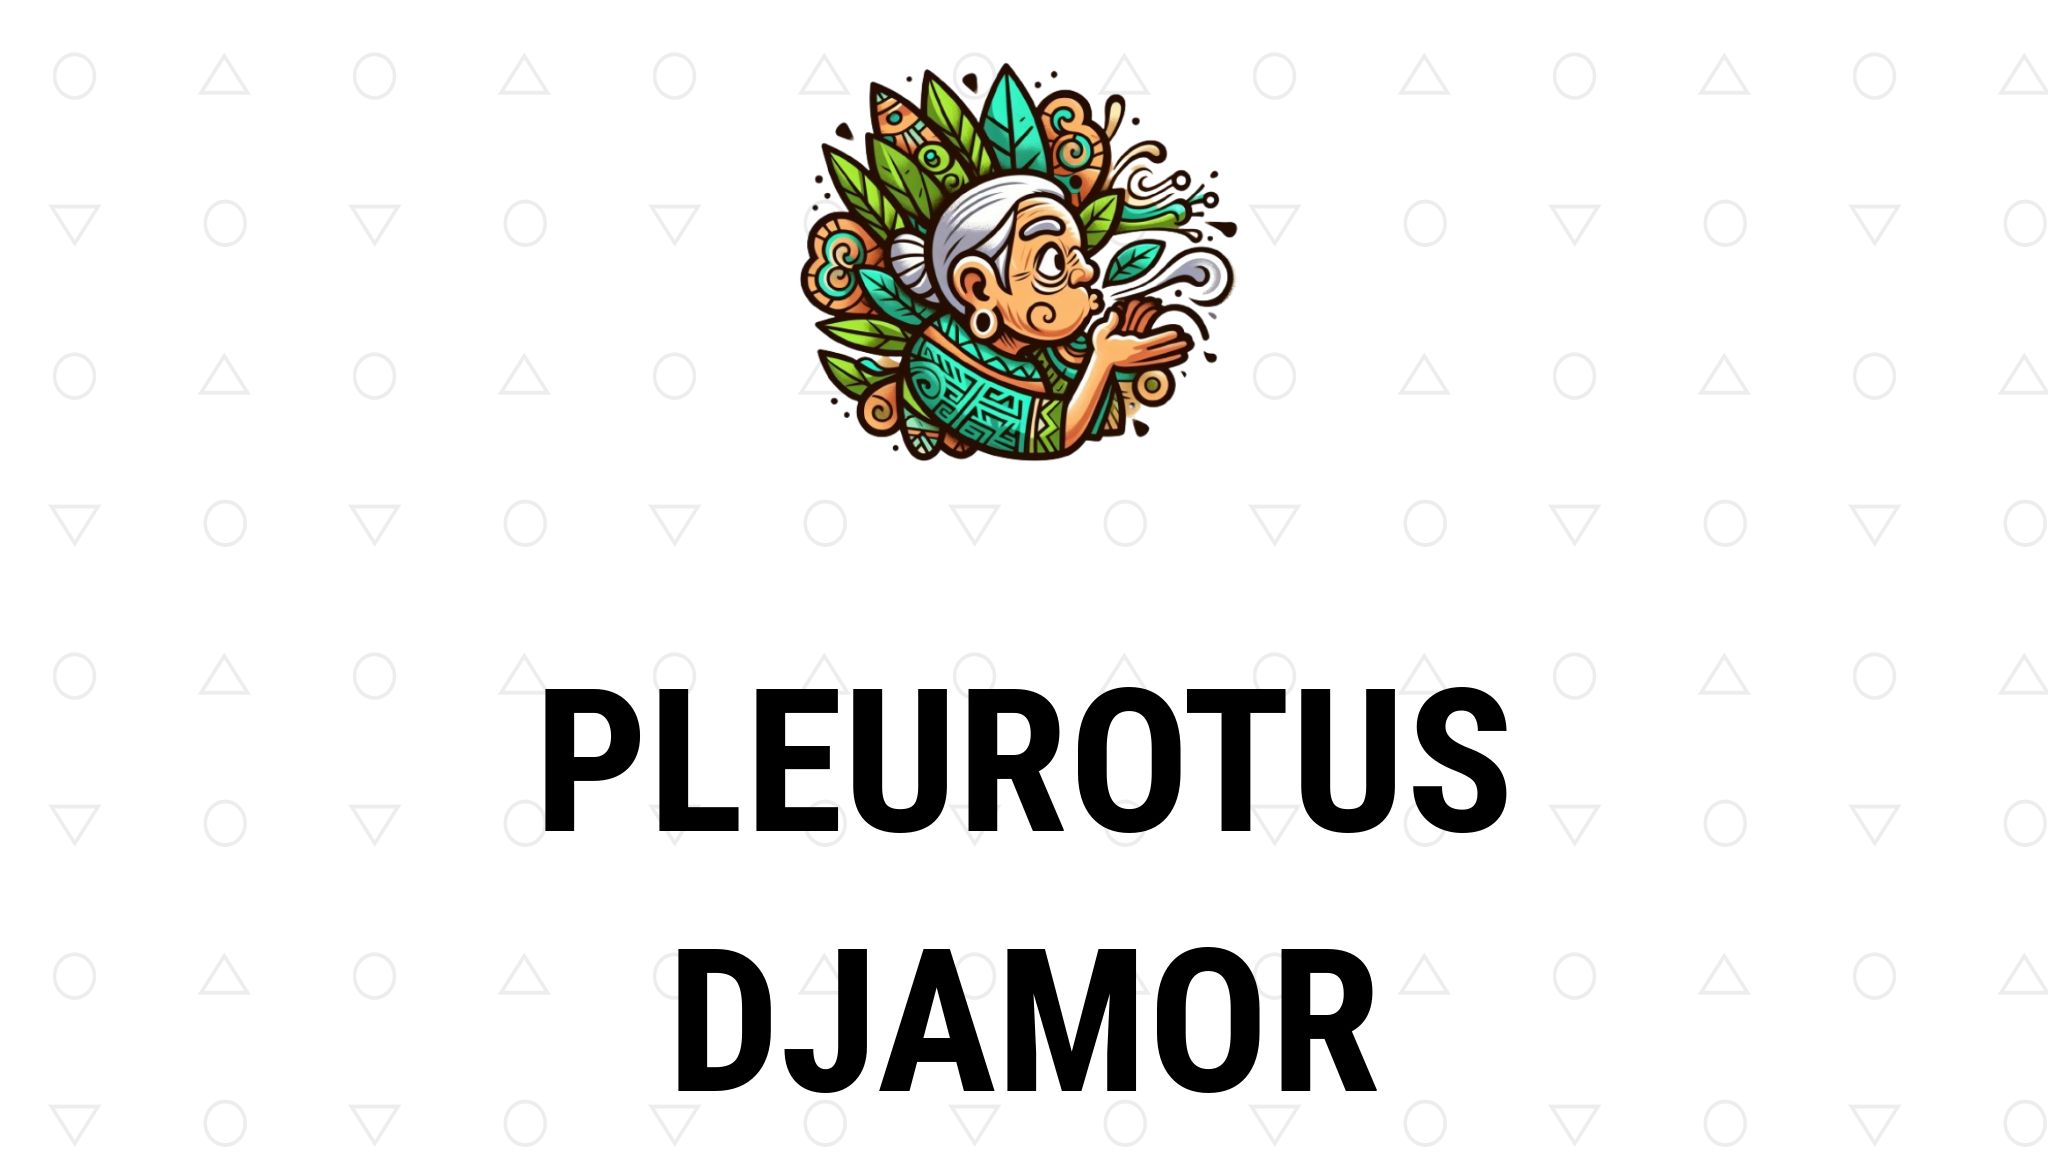 Pletorus Djamor